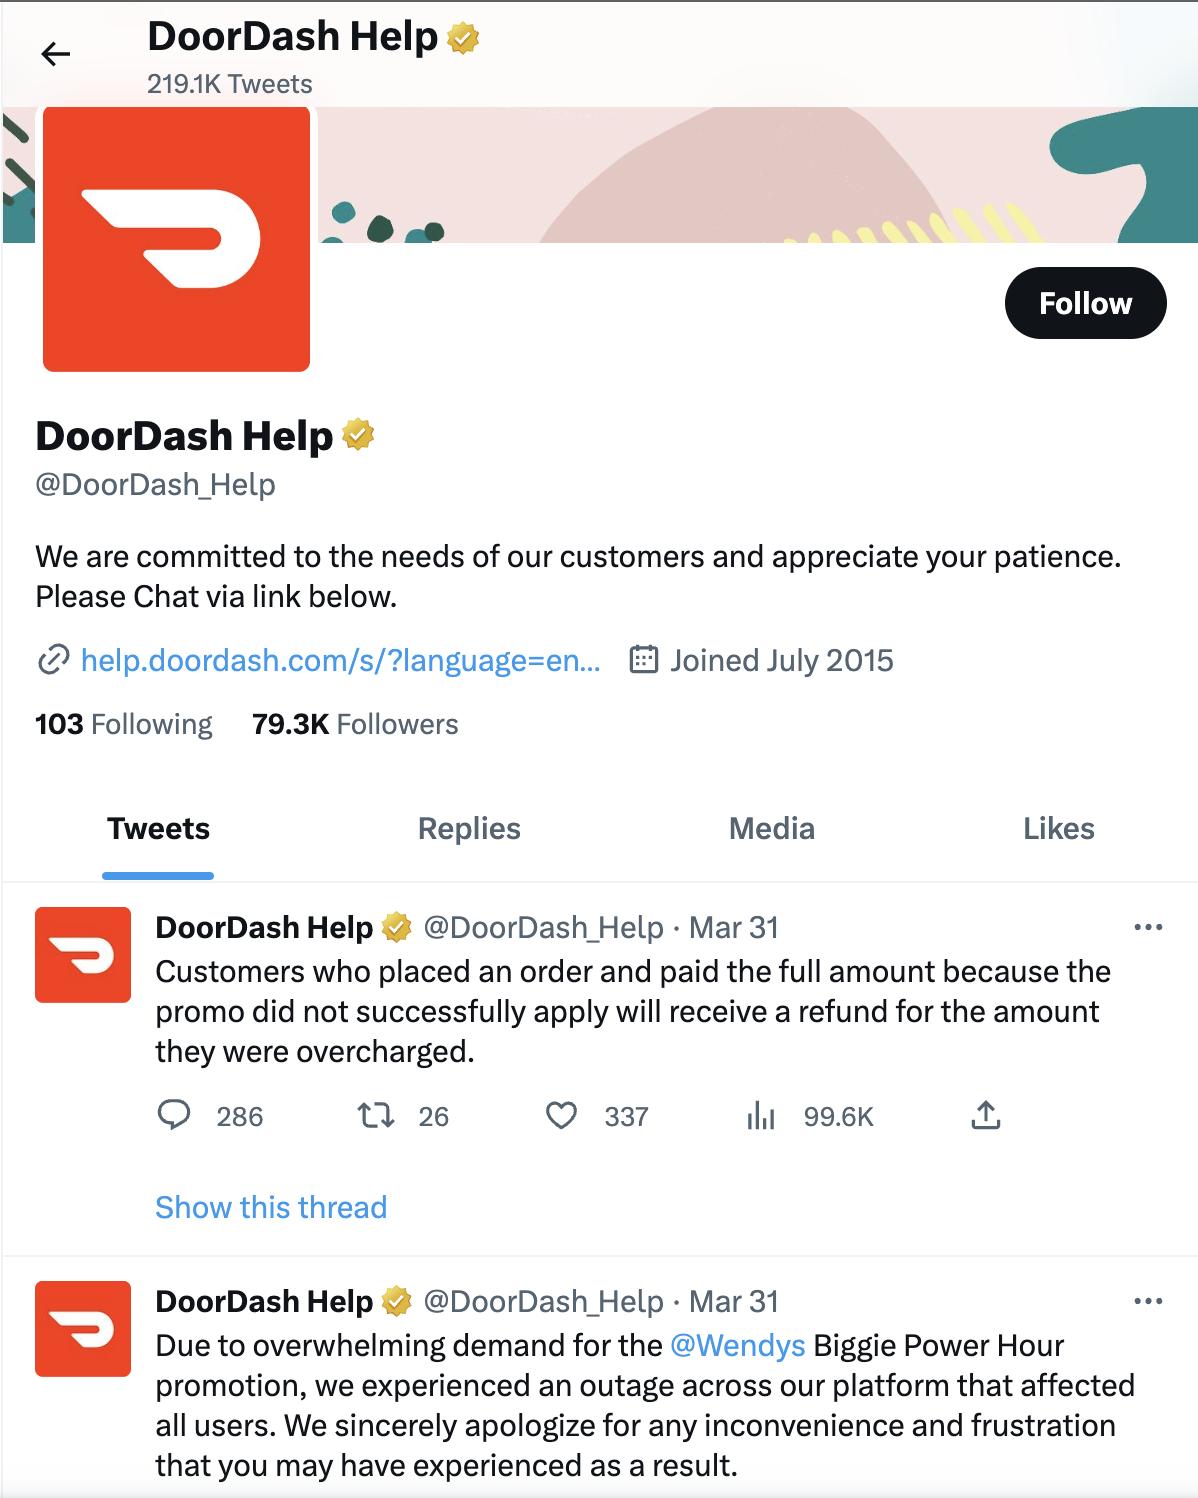 How to Contact DoorDash Customer Service